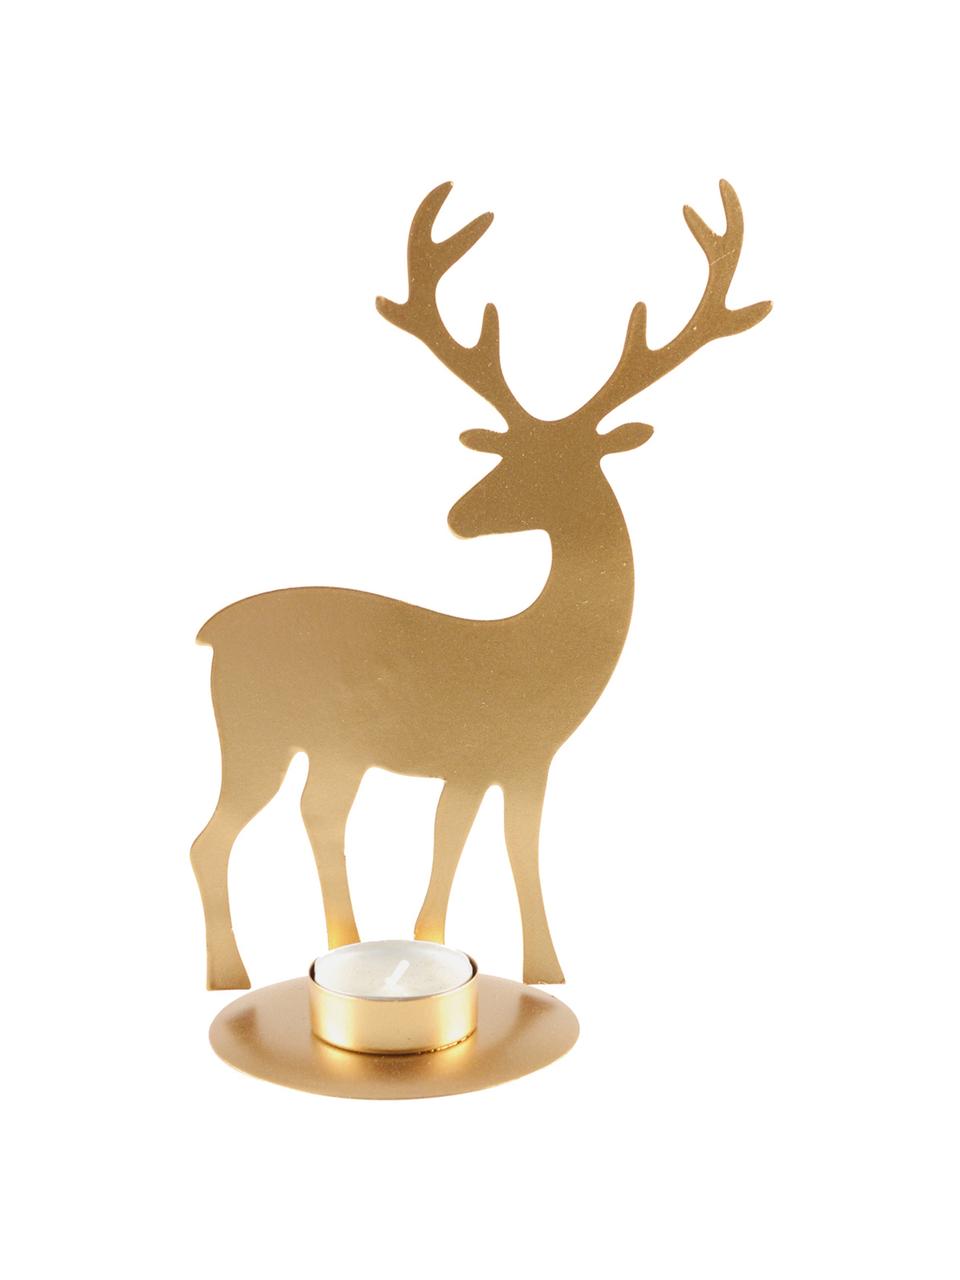 Teelichthalter Deer in Goldfarben, Metall, beschichtet, Goldfarben, B 14 x H 21 cm